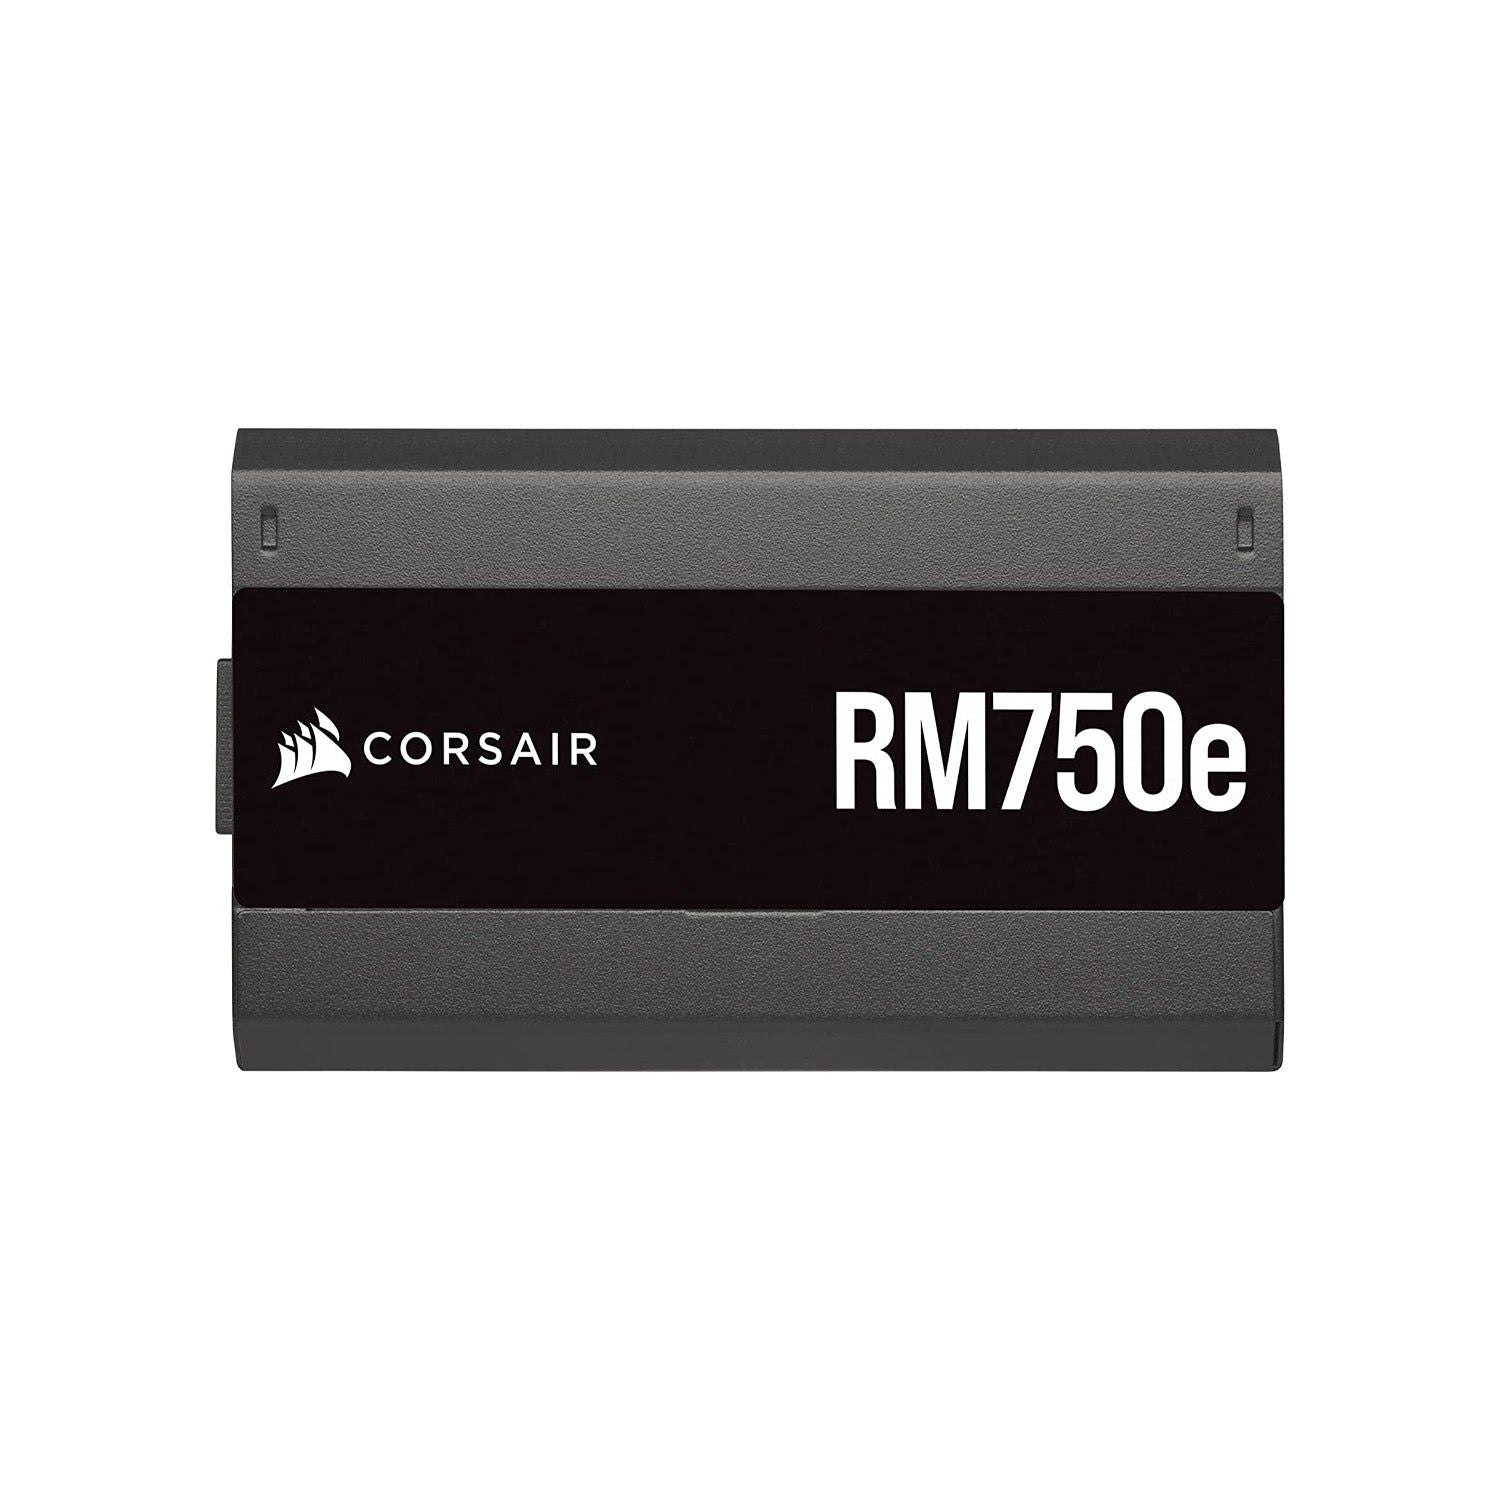 CORSAIR RMe Series, RM 750e, 750Watt - OVERCLOCK Computer